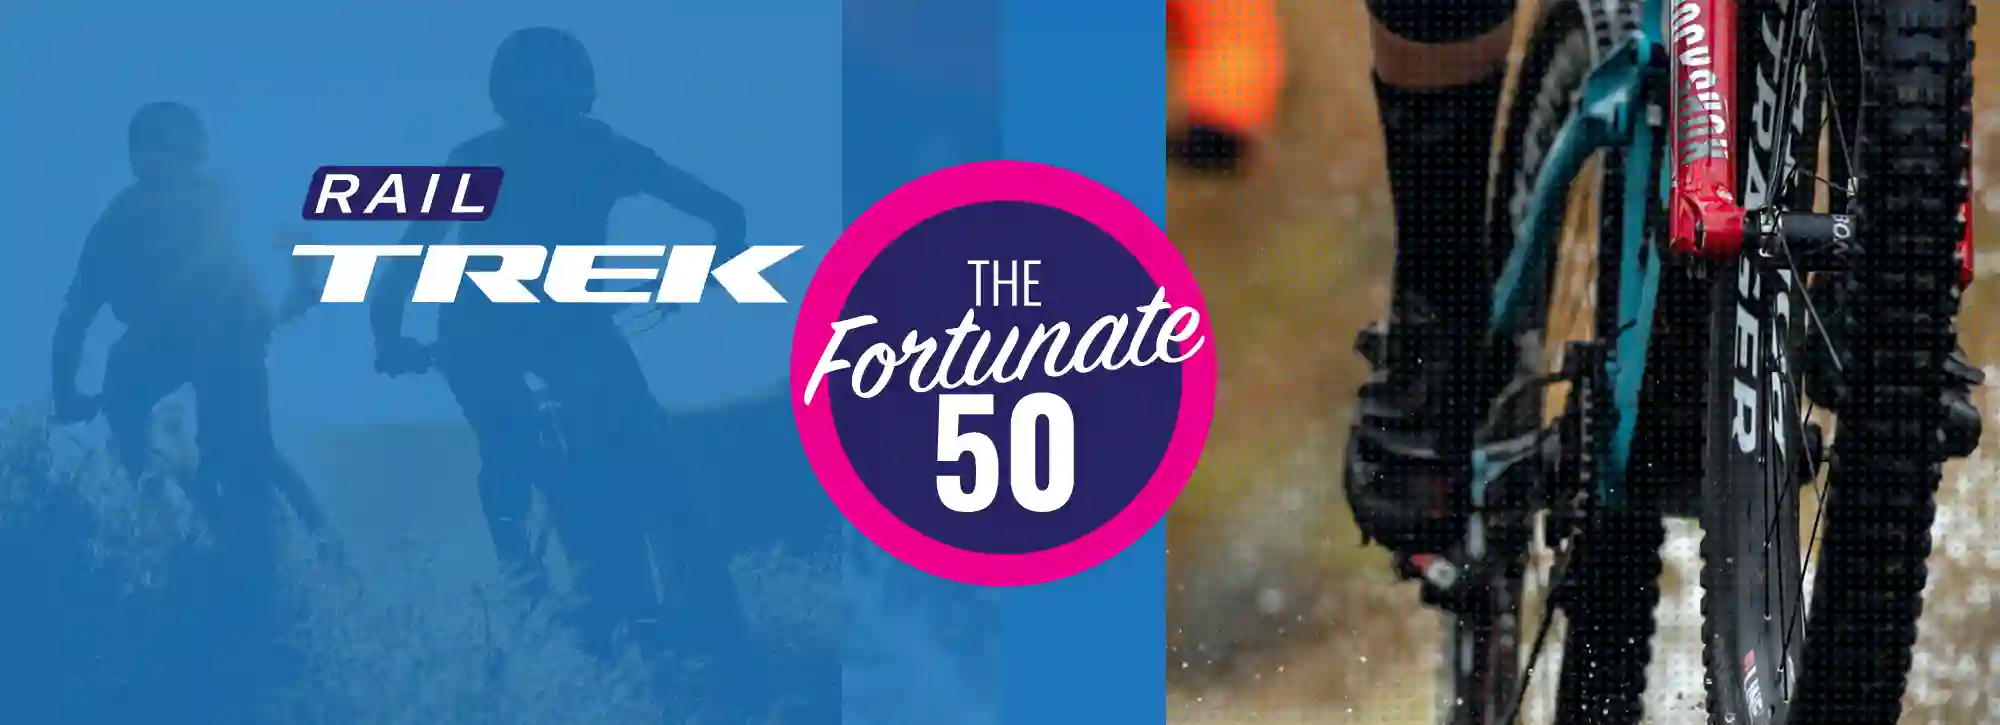 Scotty Browns Trek Rail E bike Special for The Fortunate 50